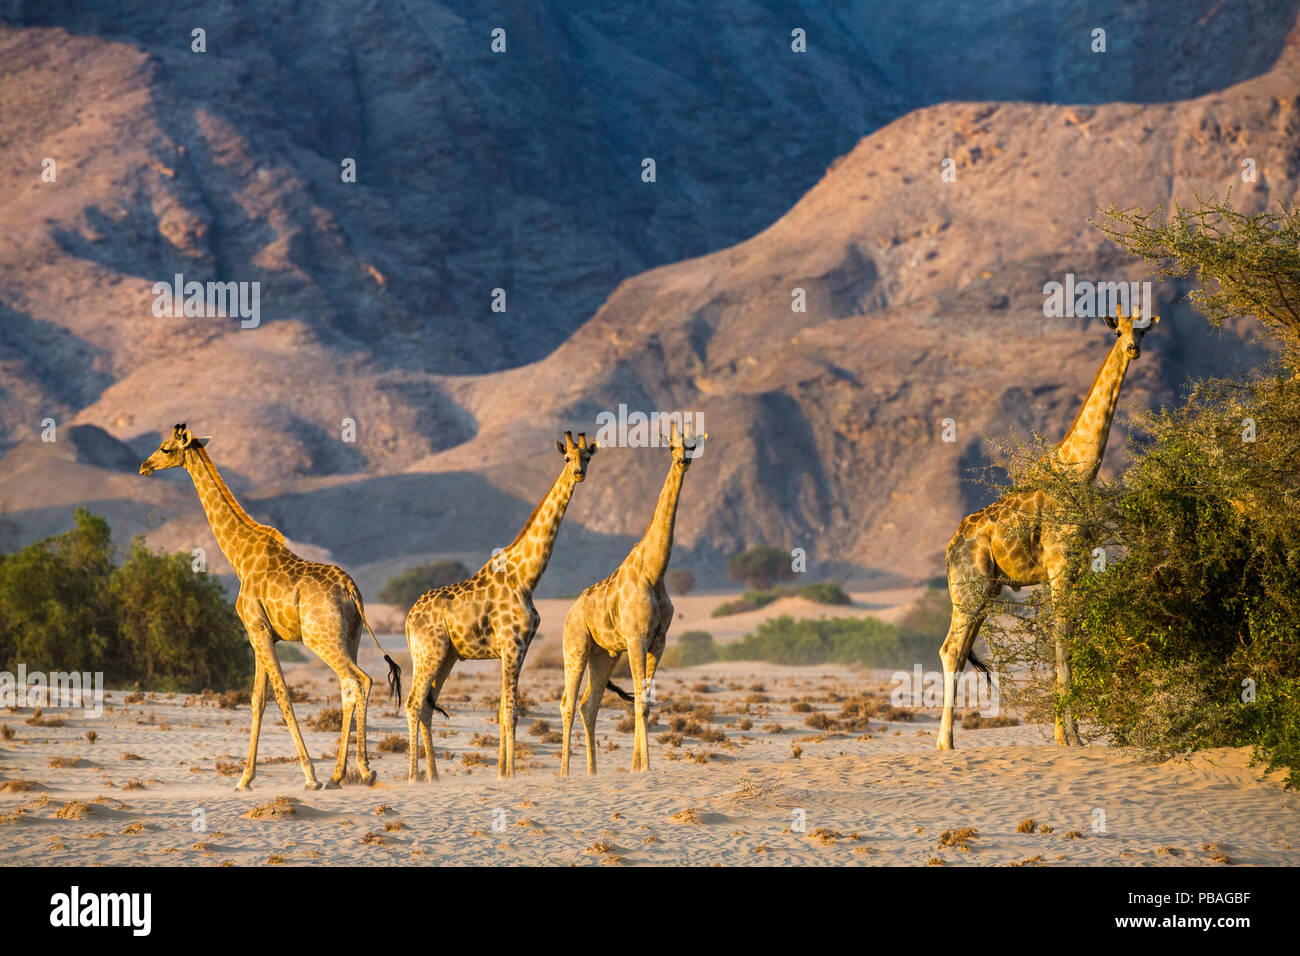 Reticulated giraffes (Giraffa camelopardalis) desert dwelling giraffes in Damaraland. Namibia Stock Photo